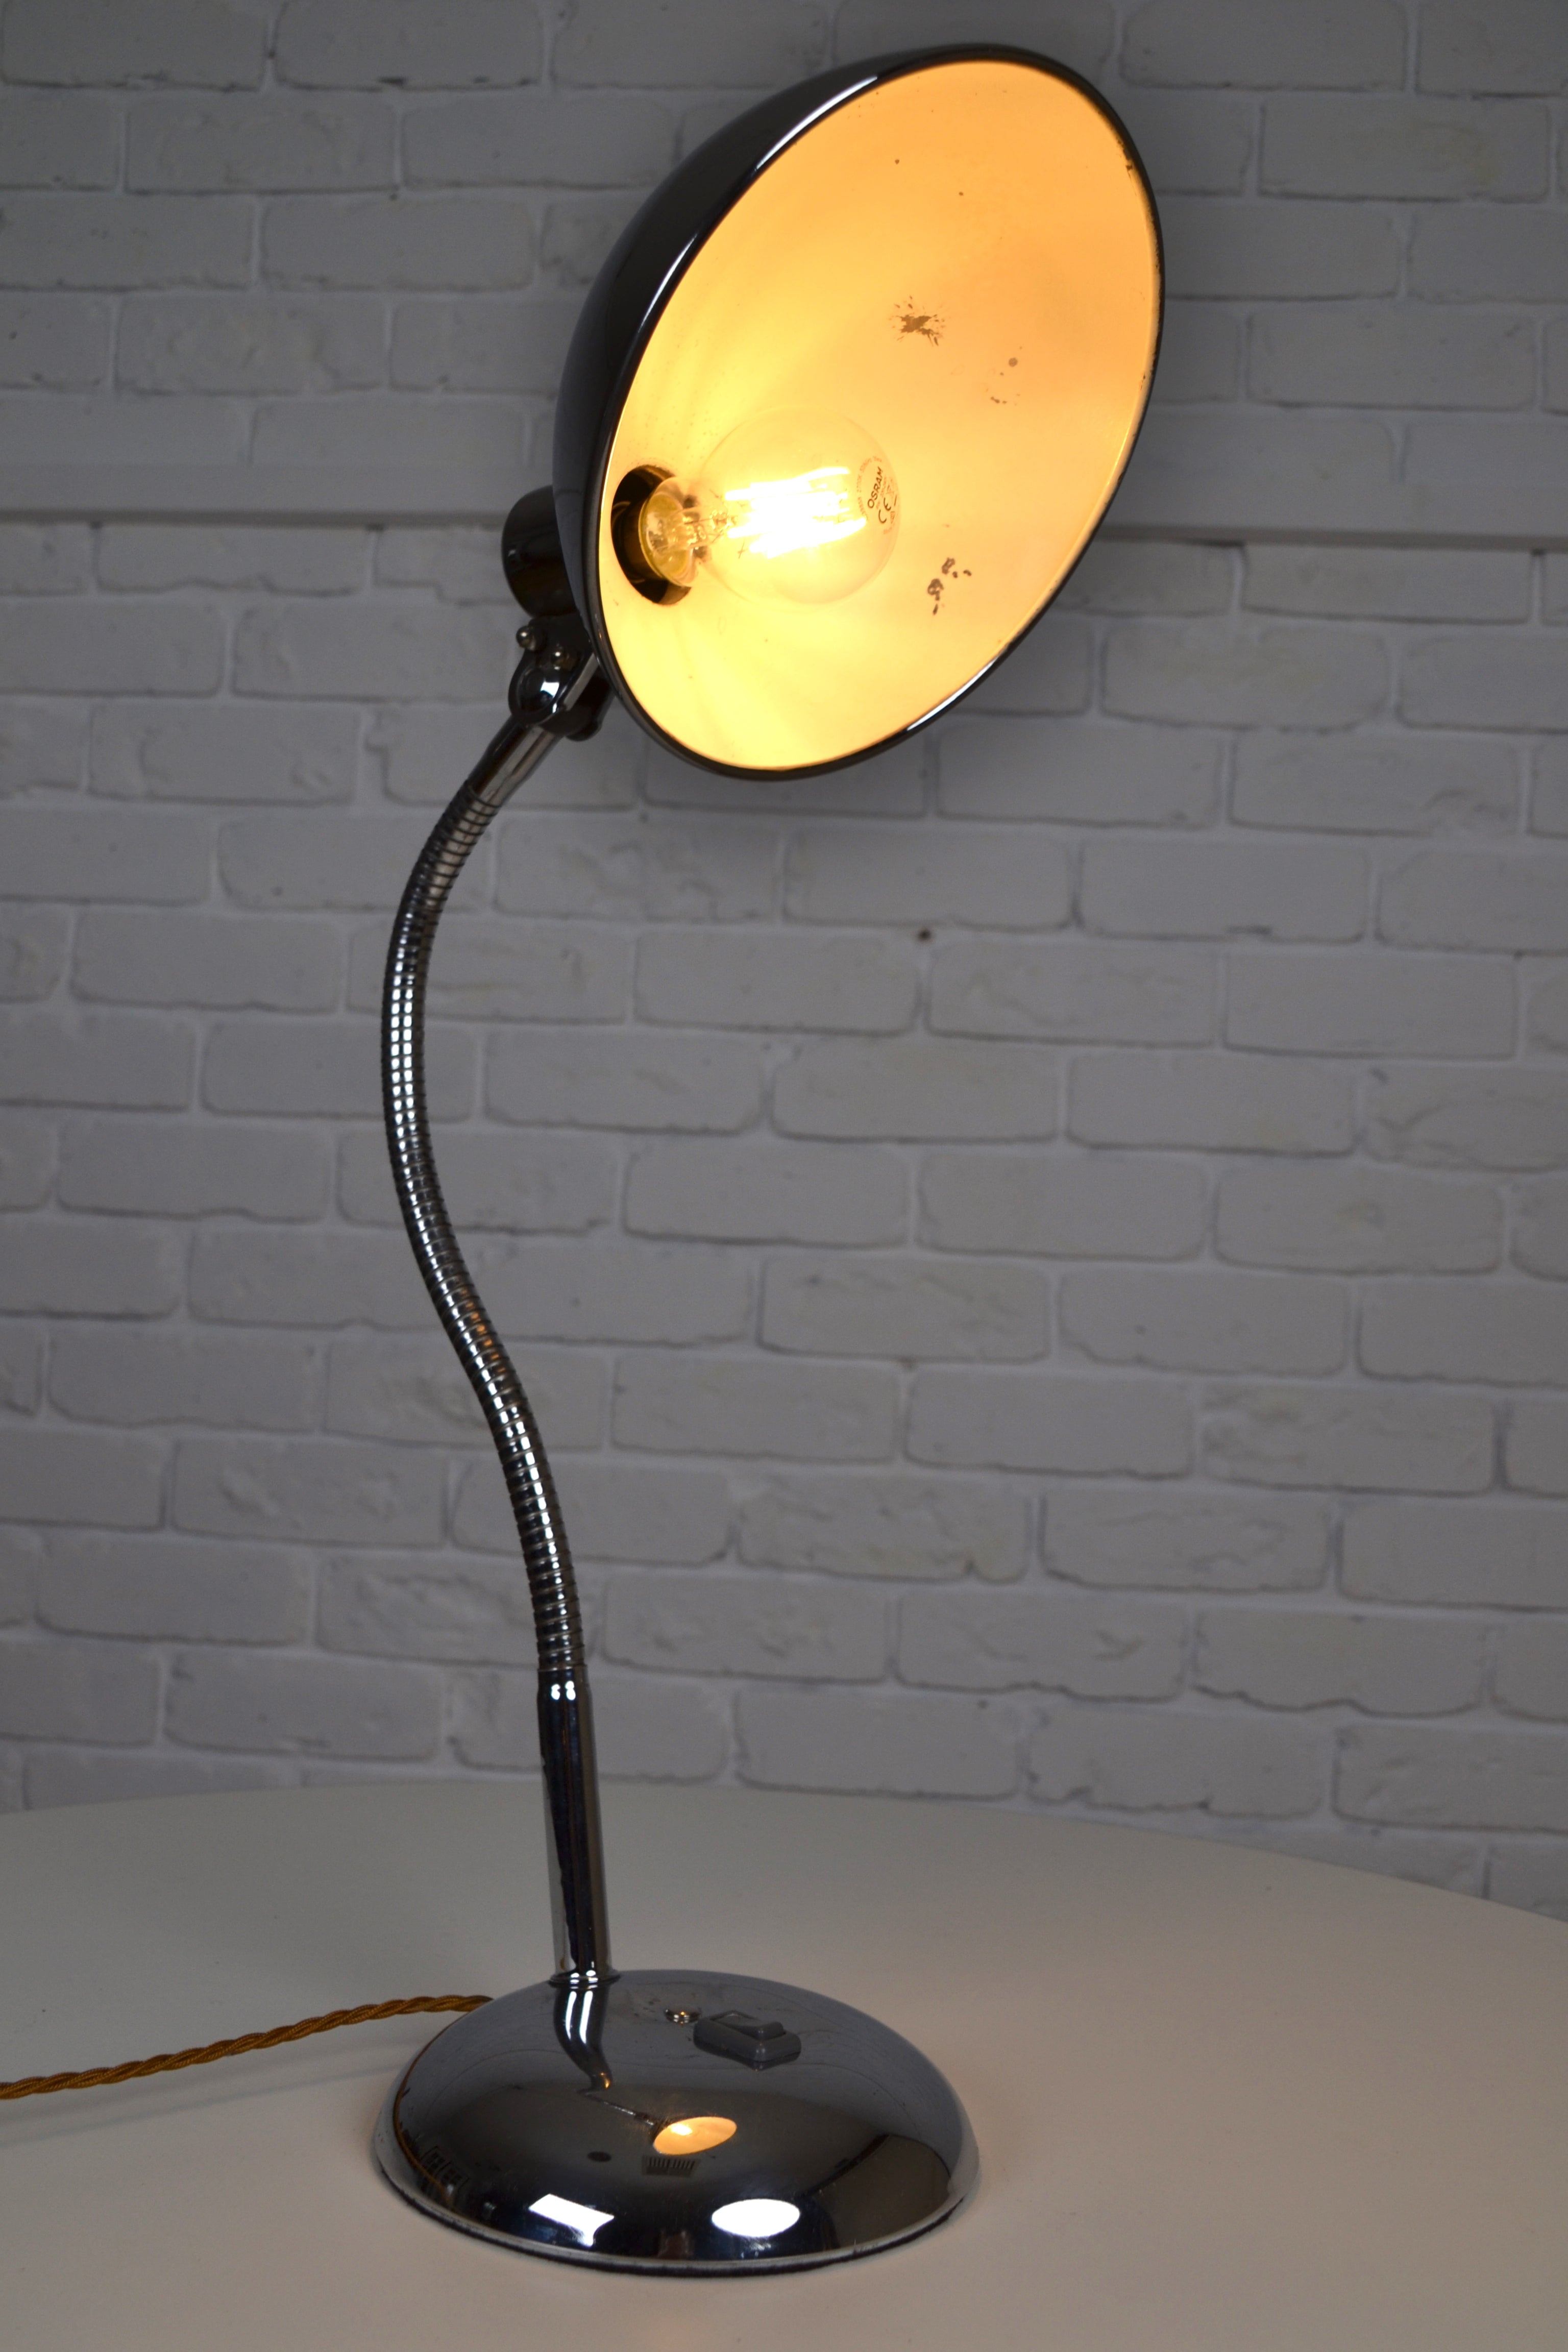 Vintage Kasier Leuchten German lamp in chrome / Christian Dell / Bauhaus design